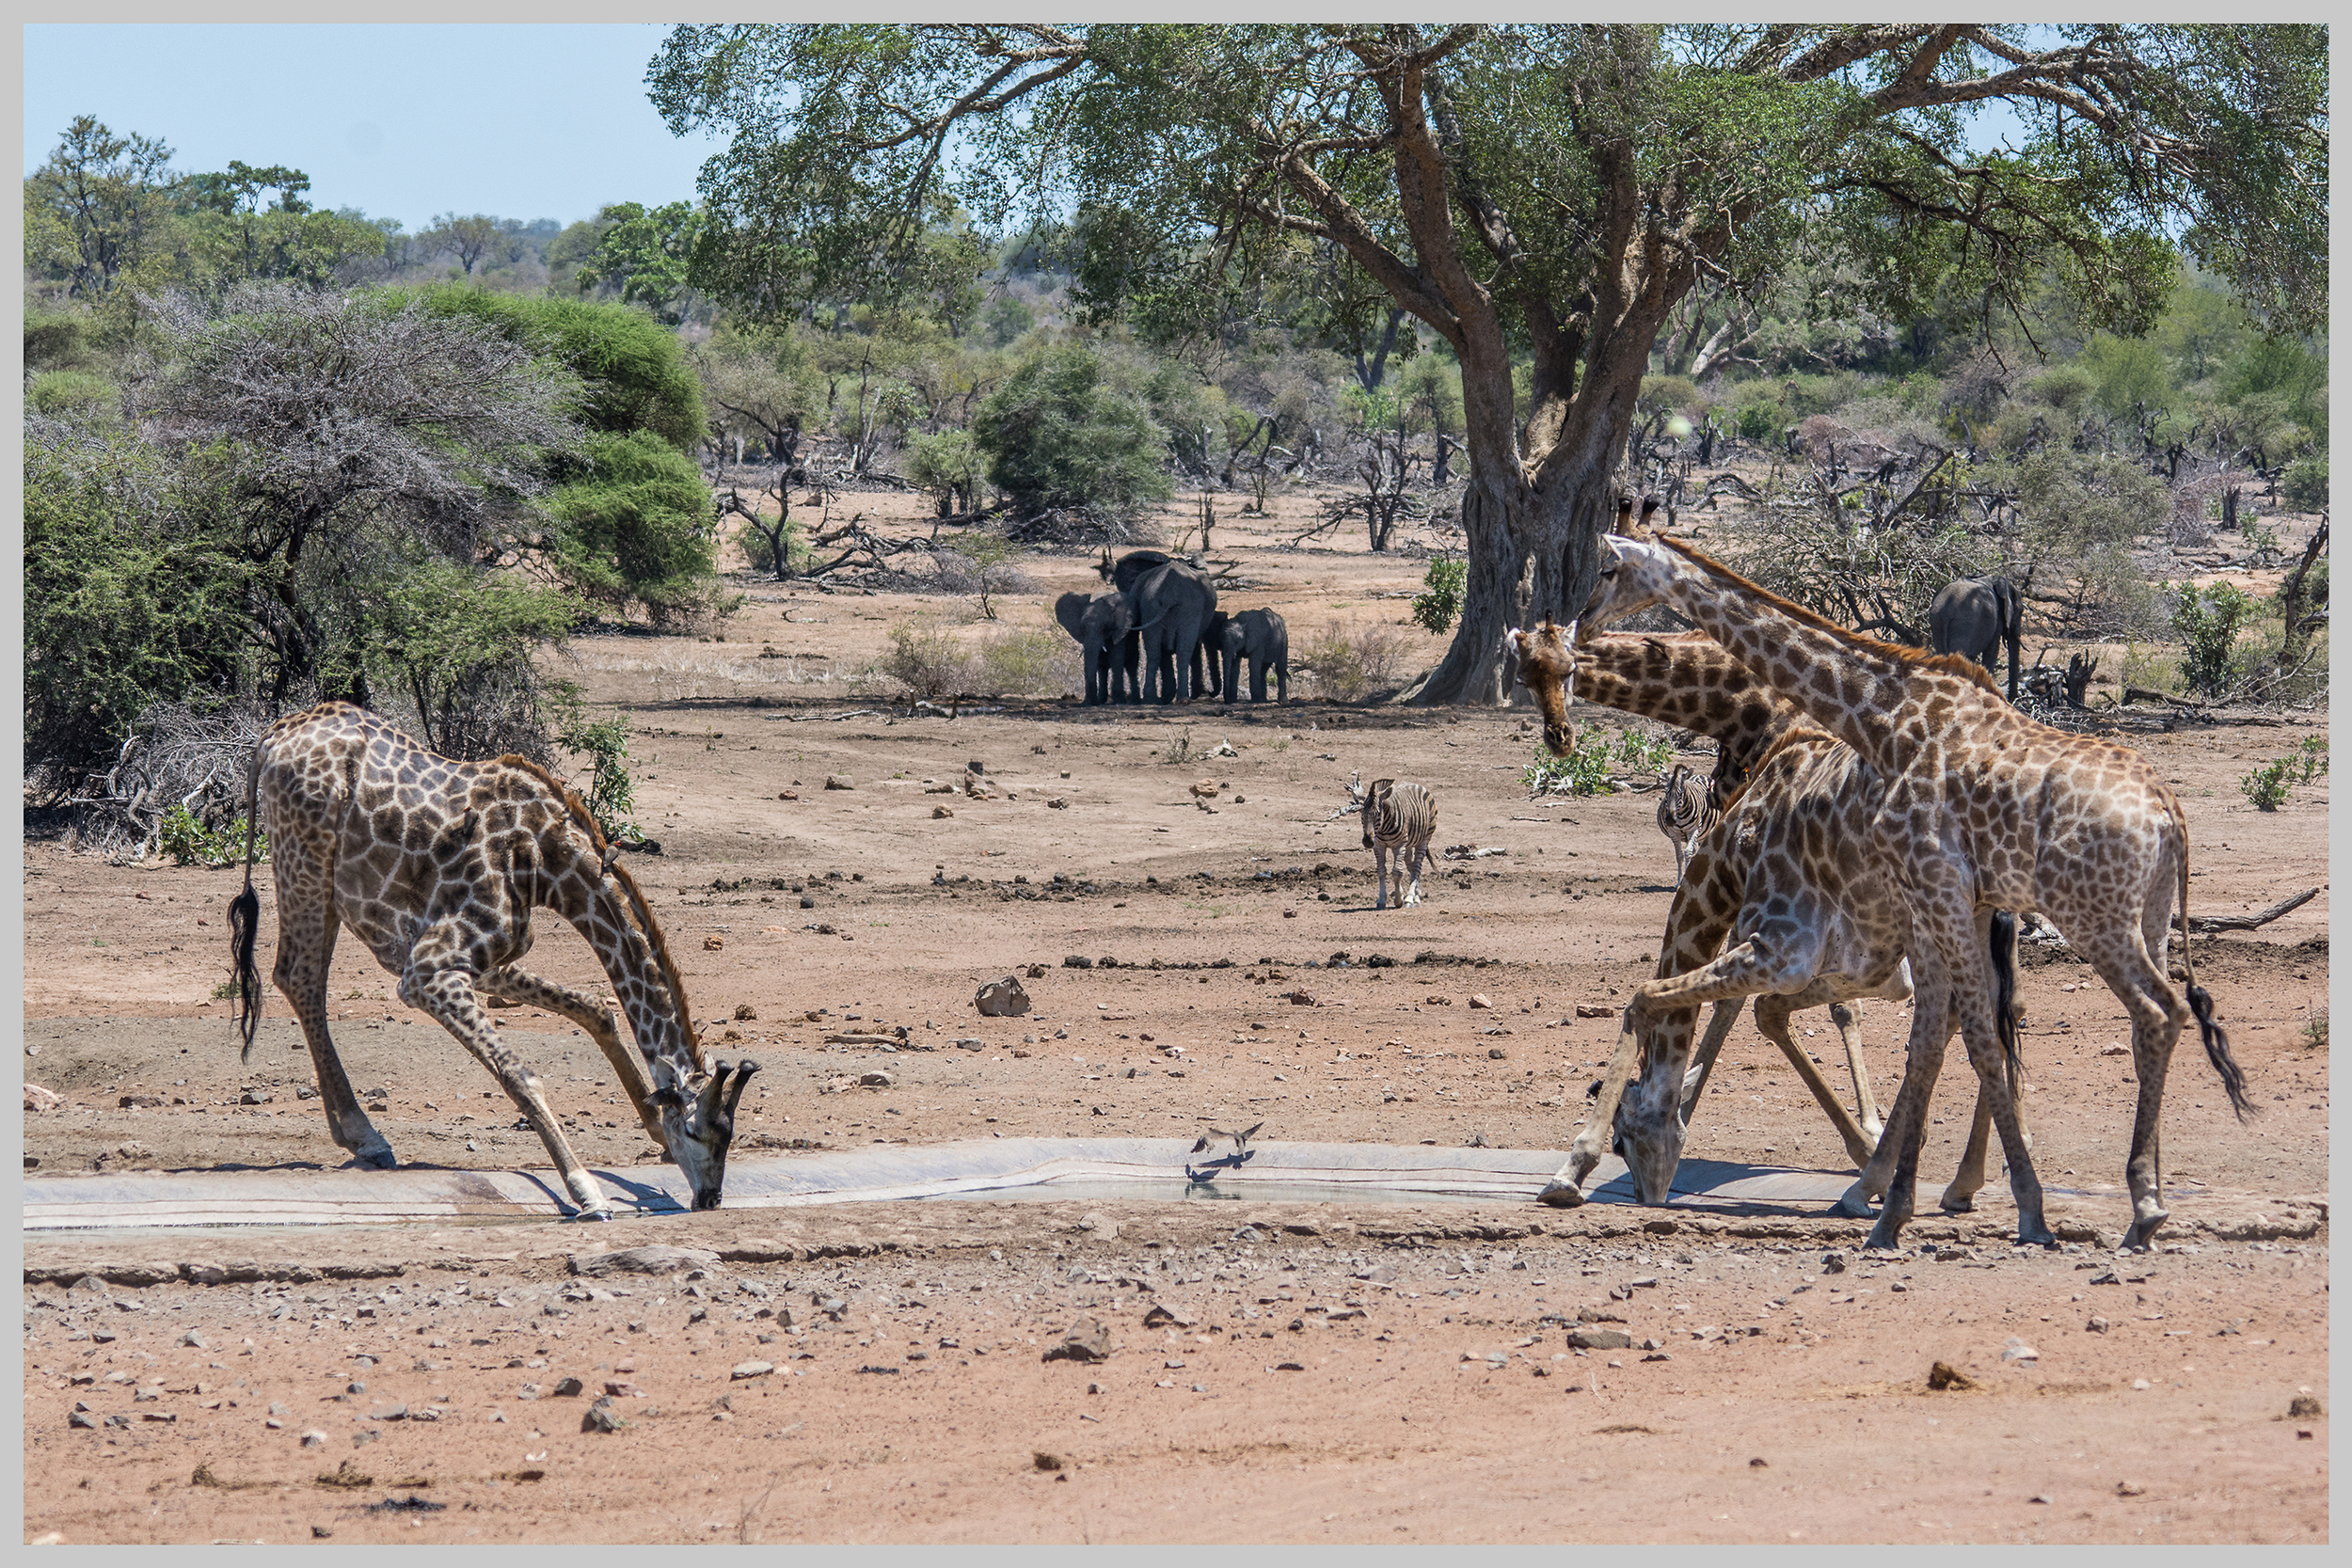 Giraffe, Zebra and African Elephant